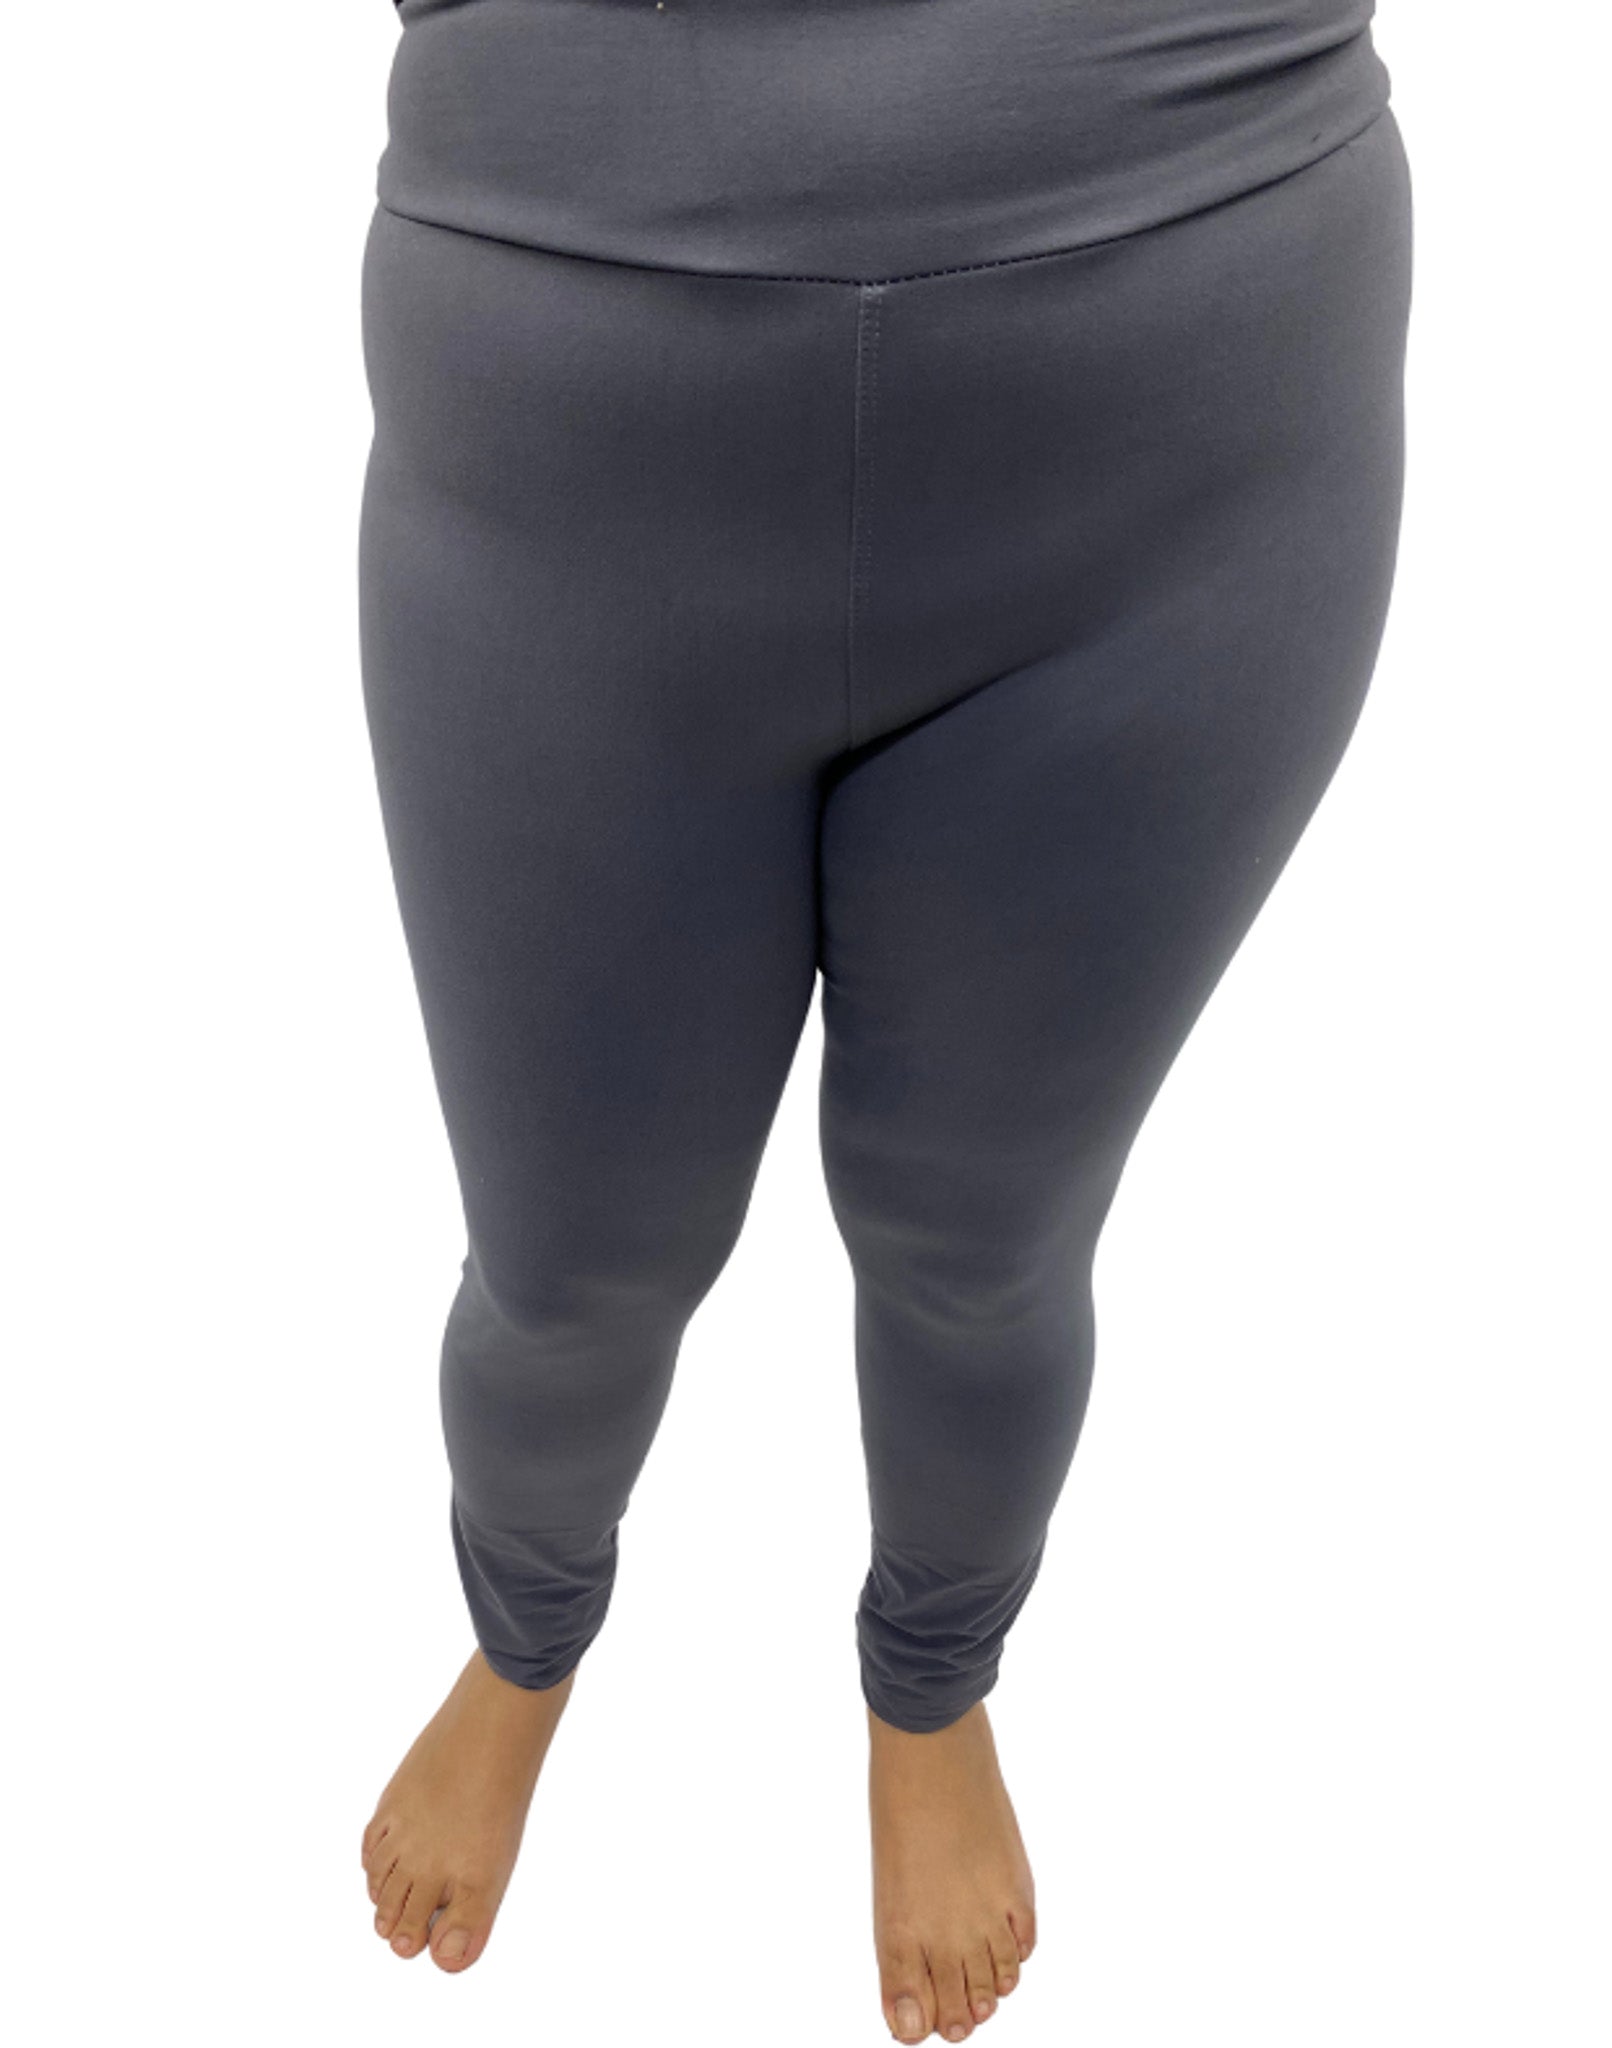 Woman wearing plus size black leggings